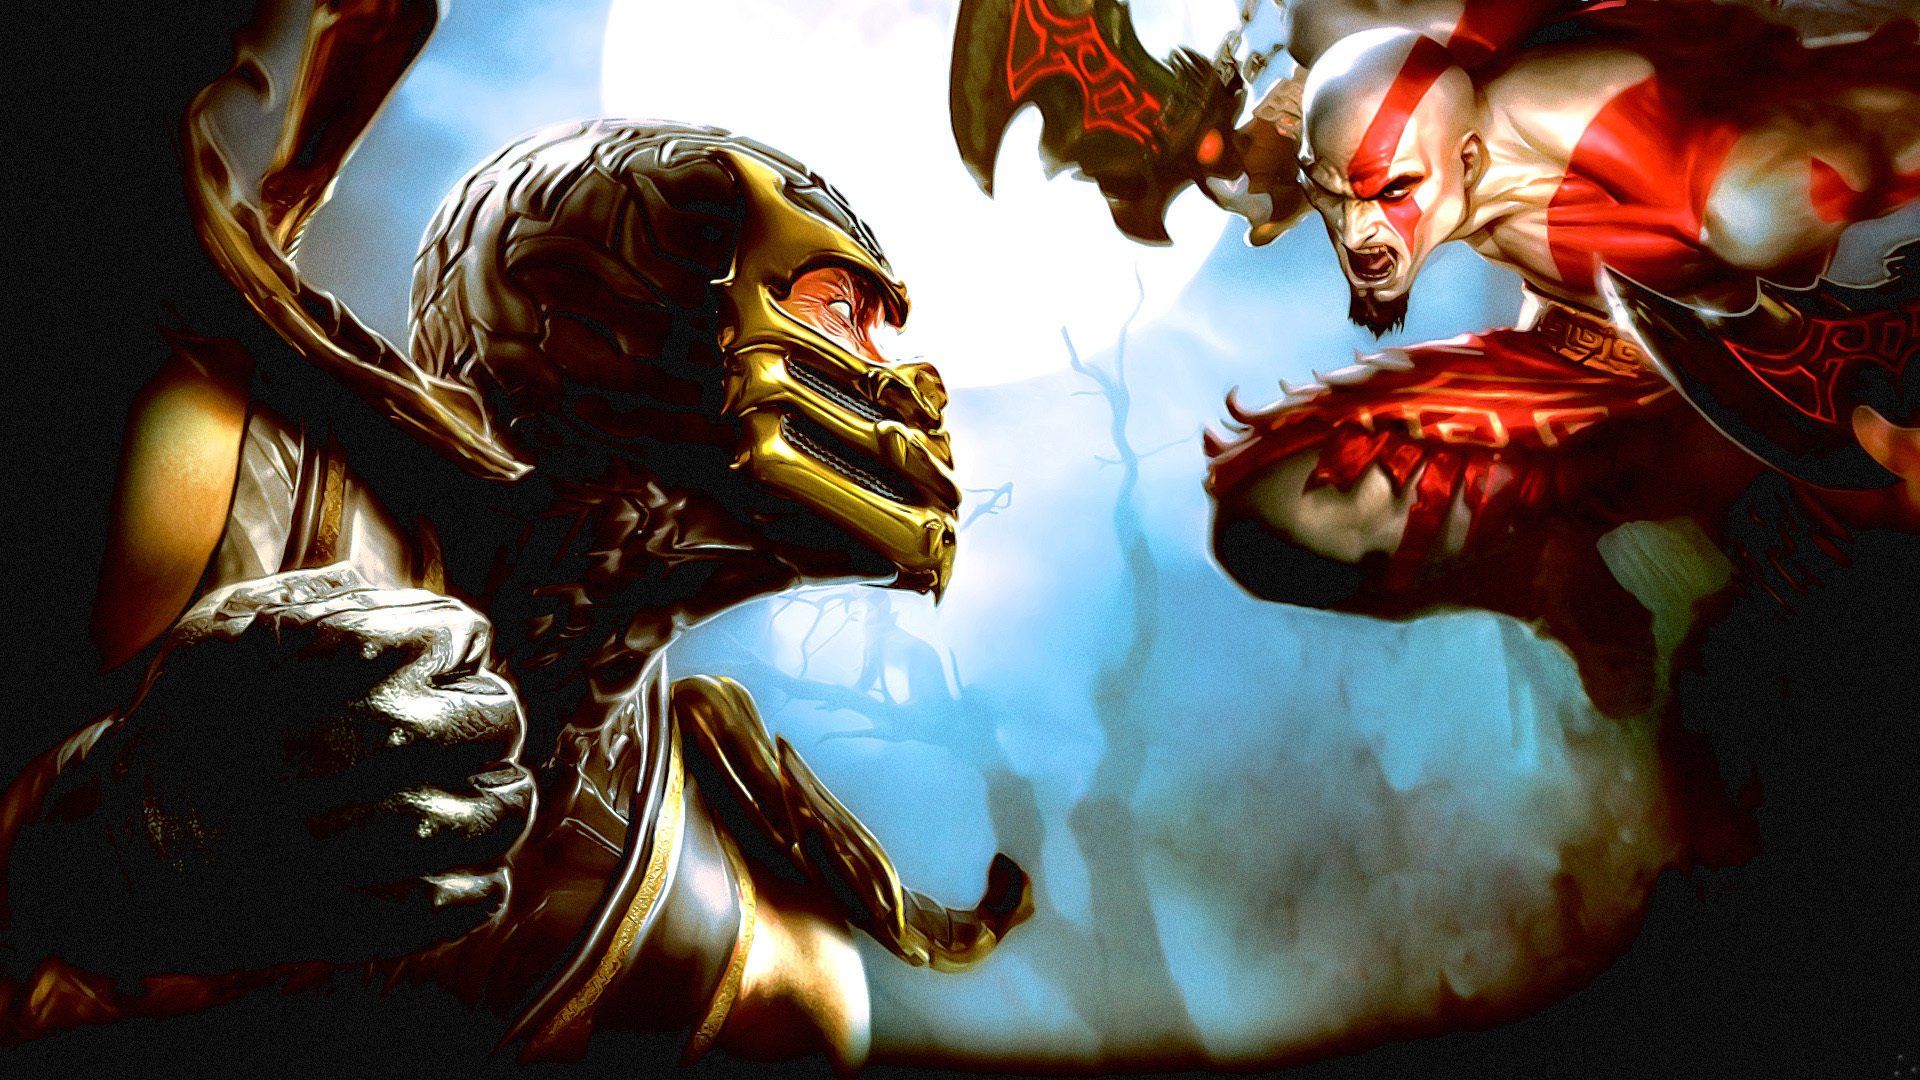 Mortal Kombat 9 Wallpaper Free Mortal Kombat 9 Background